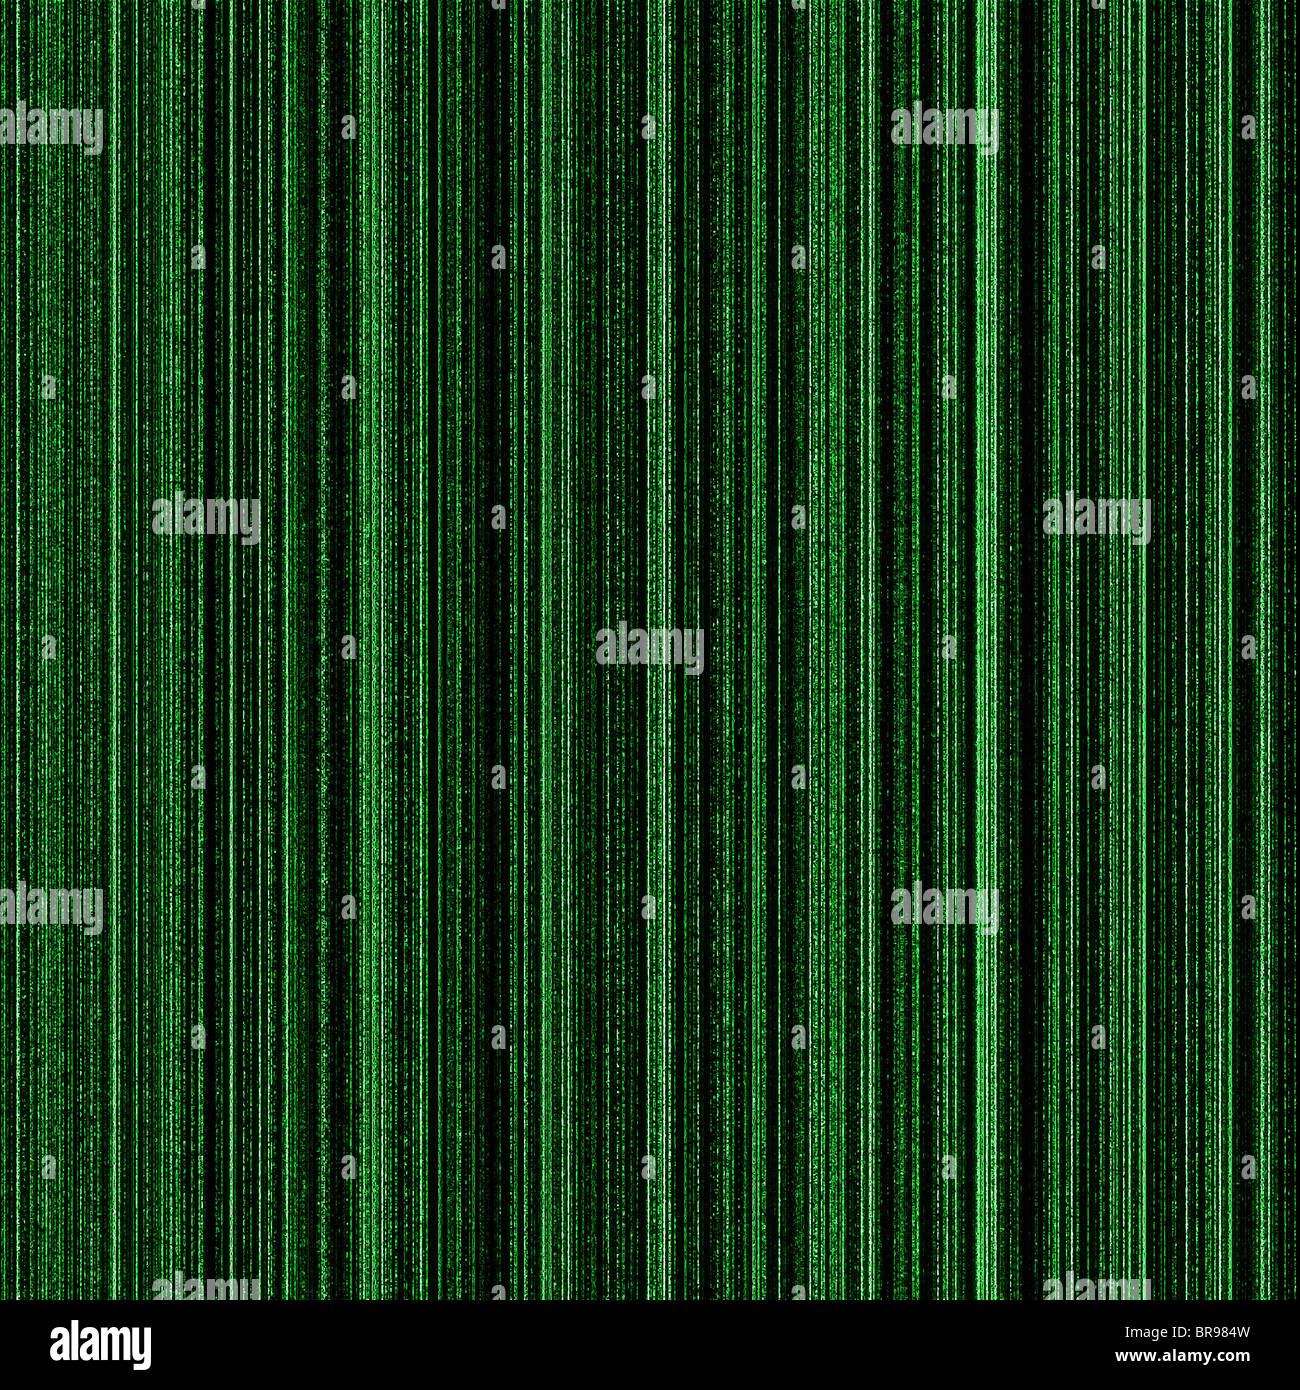 Matrix green Stock Photo